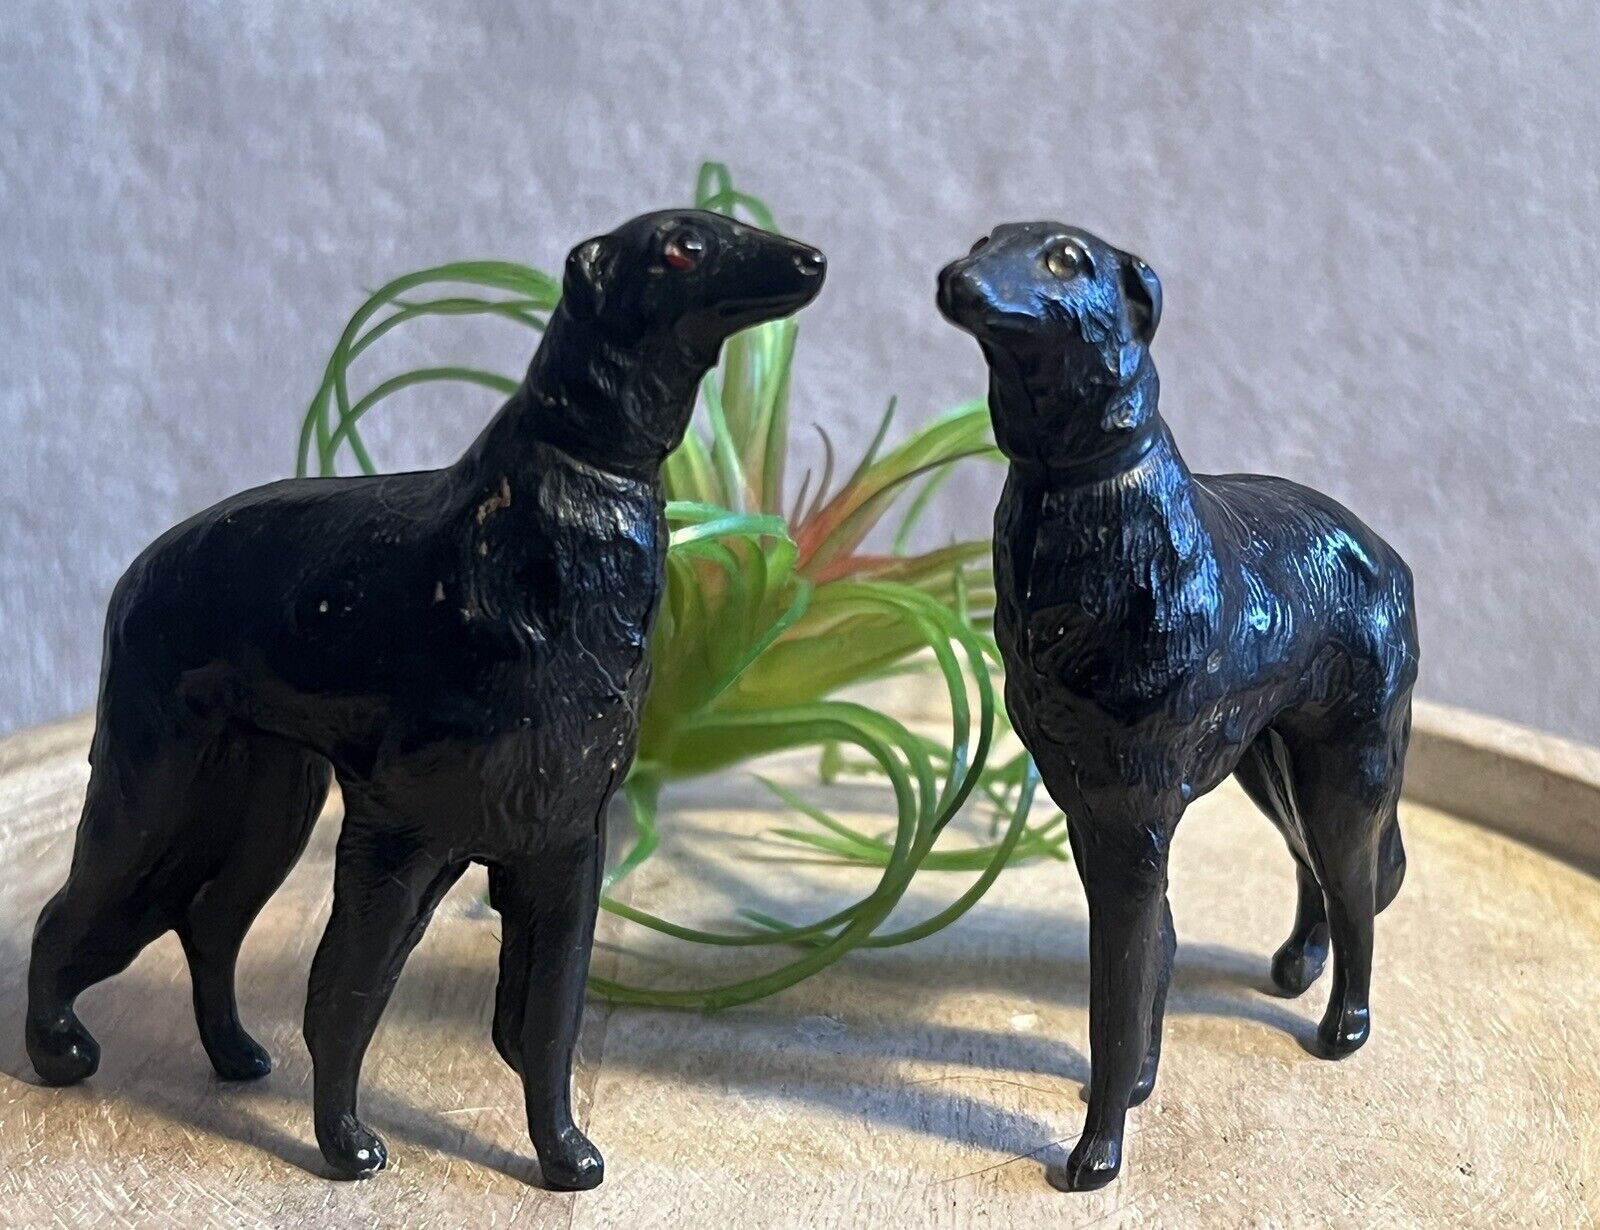 Vintage 1921-1941 pair of black borzoi figurines with rhinestone(?) eyes